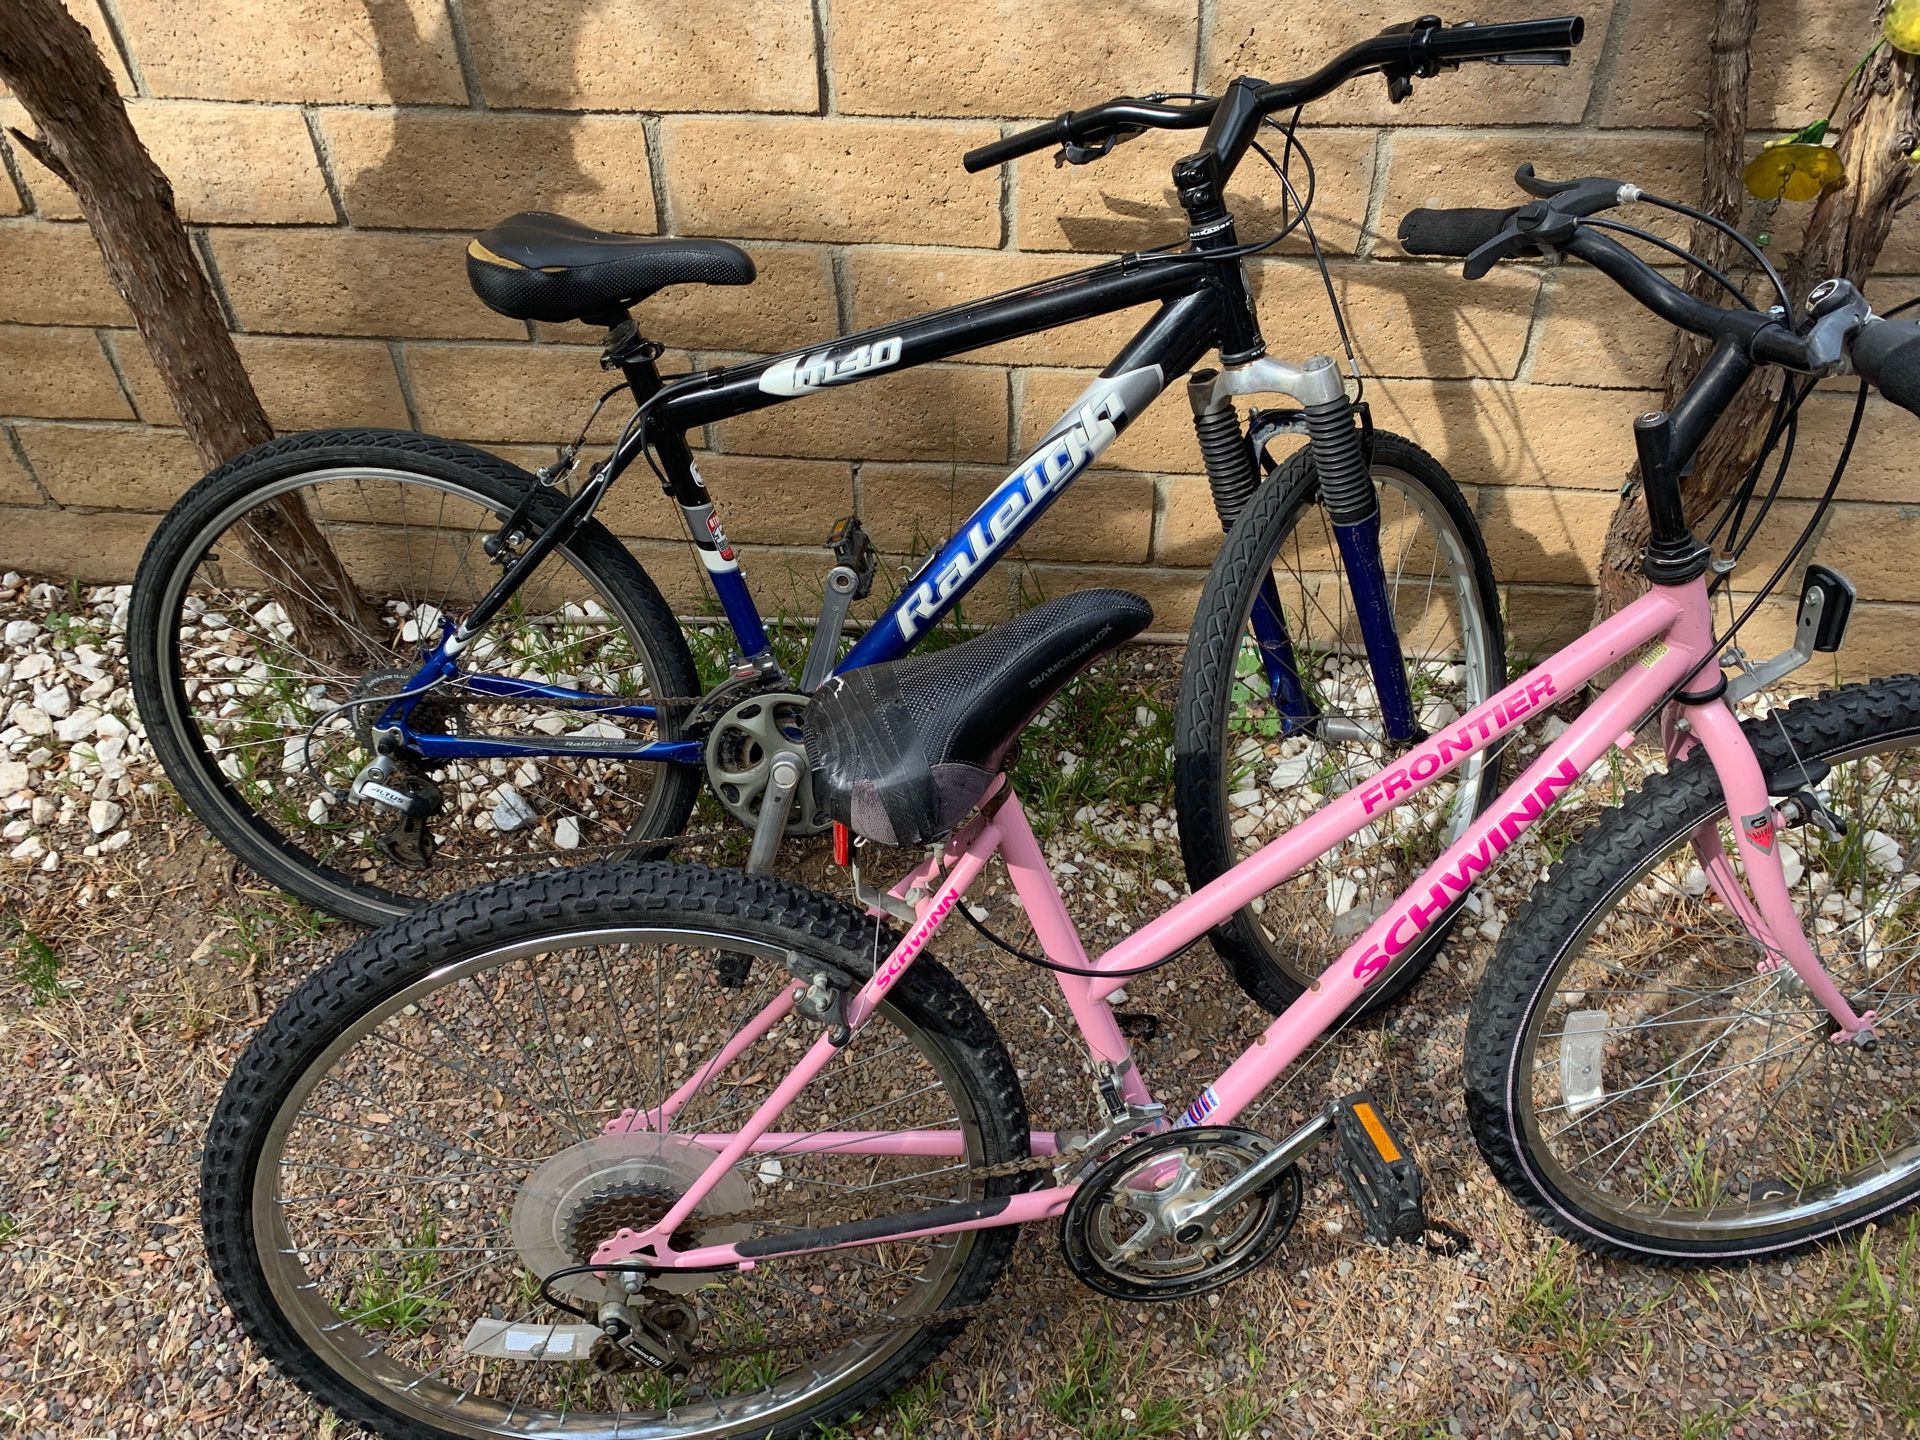 Both bikes for $120